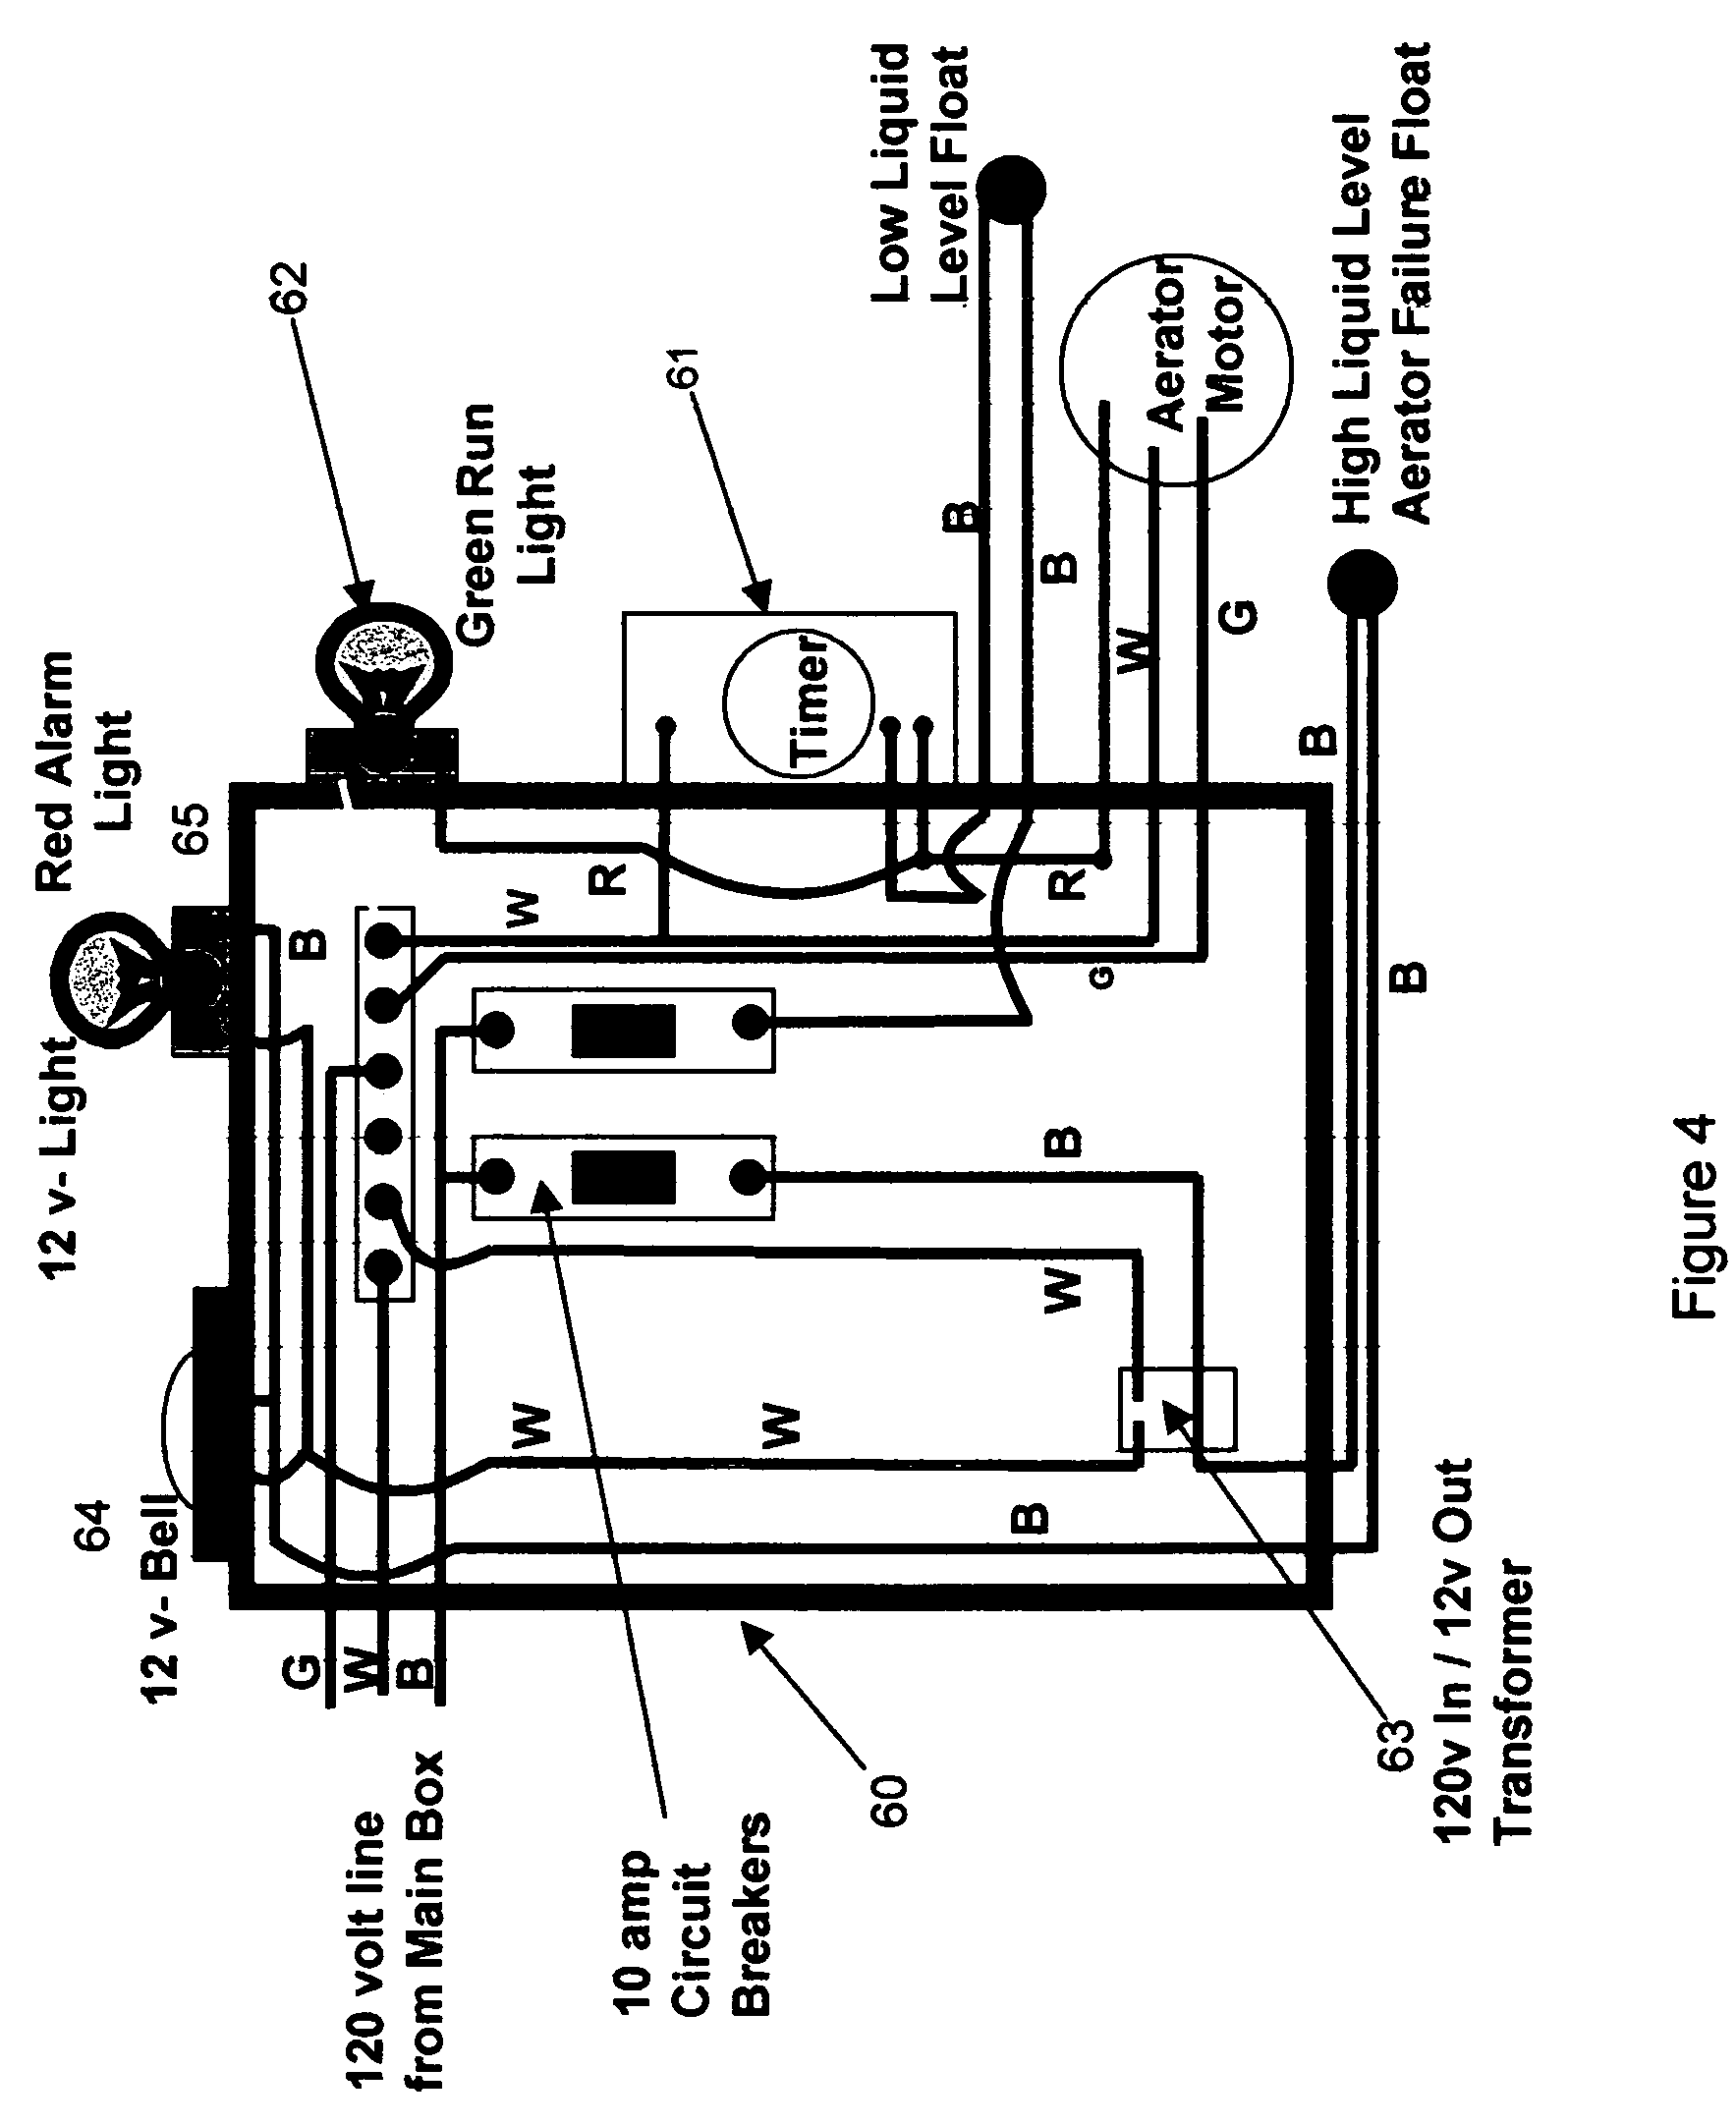 aerobic septic system wiring diagram